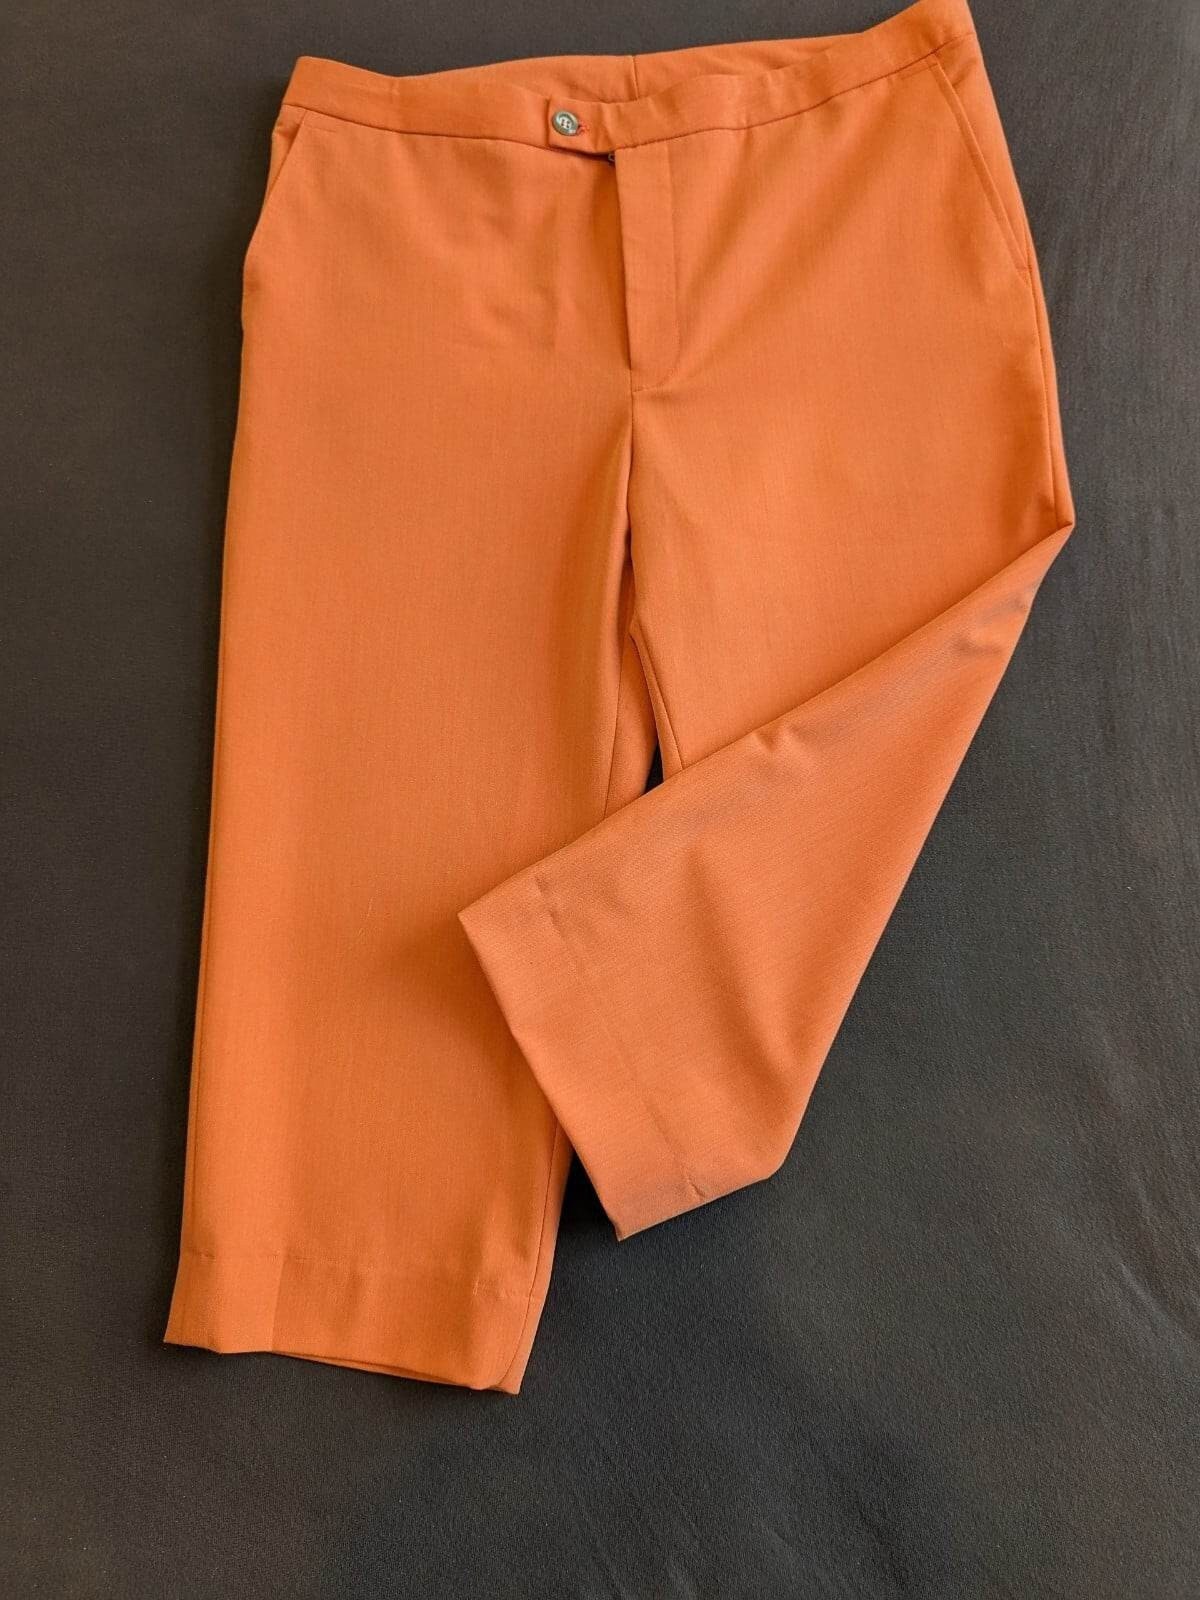 Vintage 1960s Solid Black Hi Rise Double Knit Polyester Pedal Pushers or  Capri Pants 